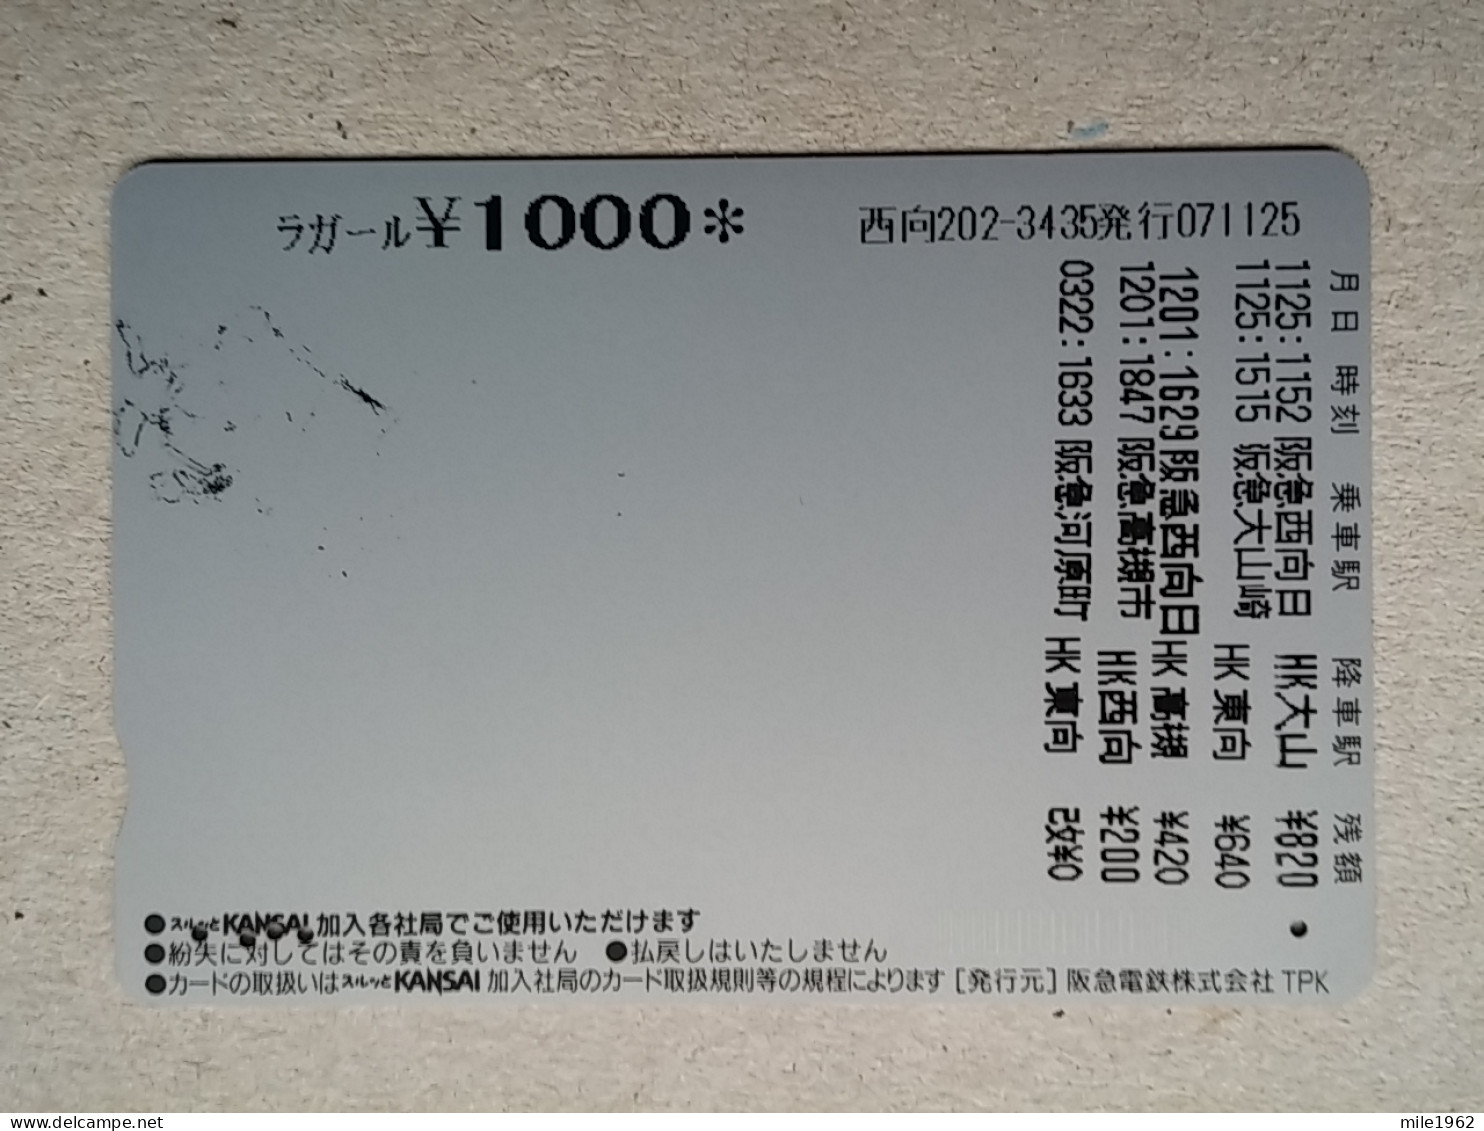 T-614 - JAPAN, Japon, Nipon, Carte Prepayee, Prepaid Card, CARD, RAILWAY, TRAIN, CHEMIN DE FER - Treinen